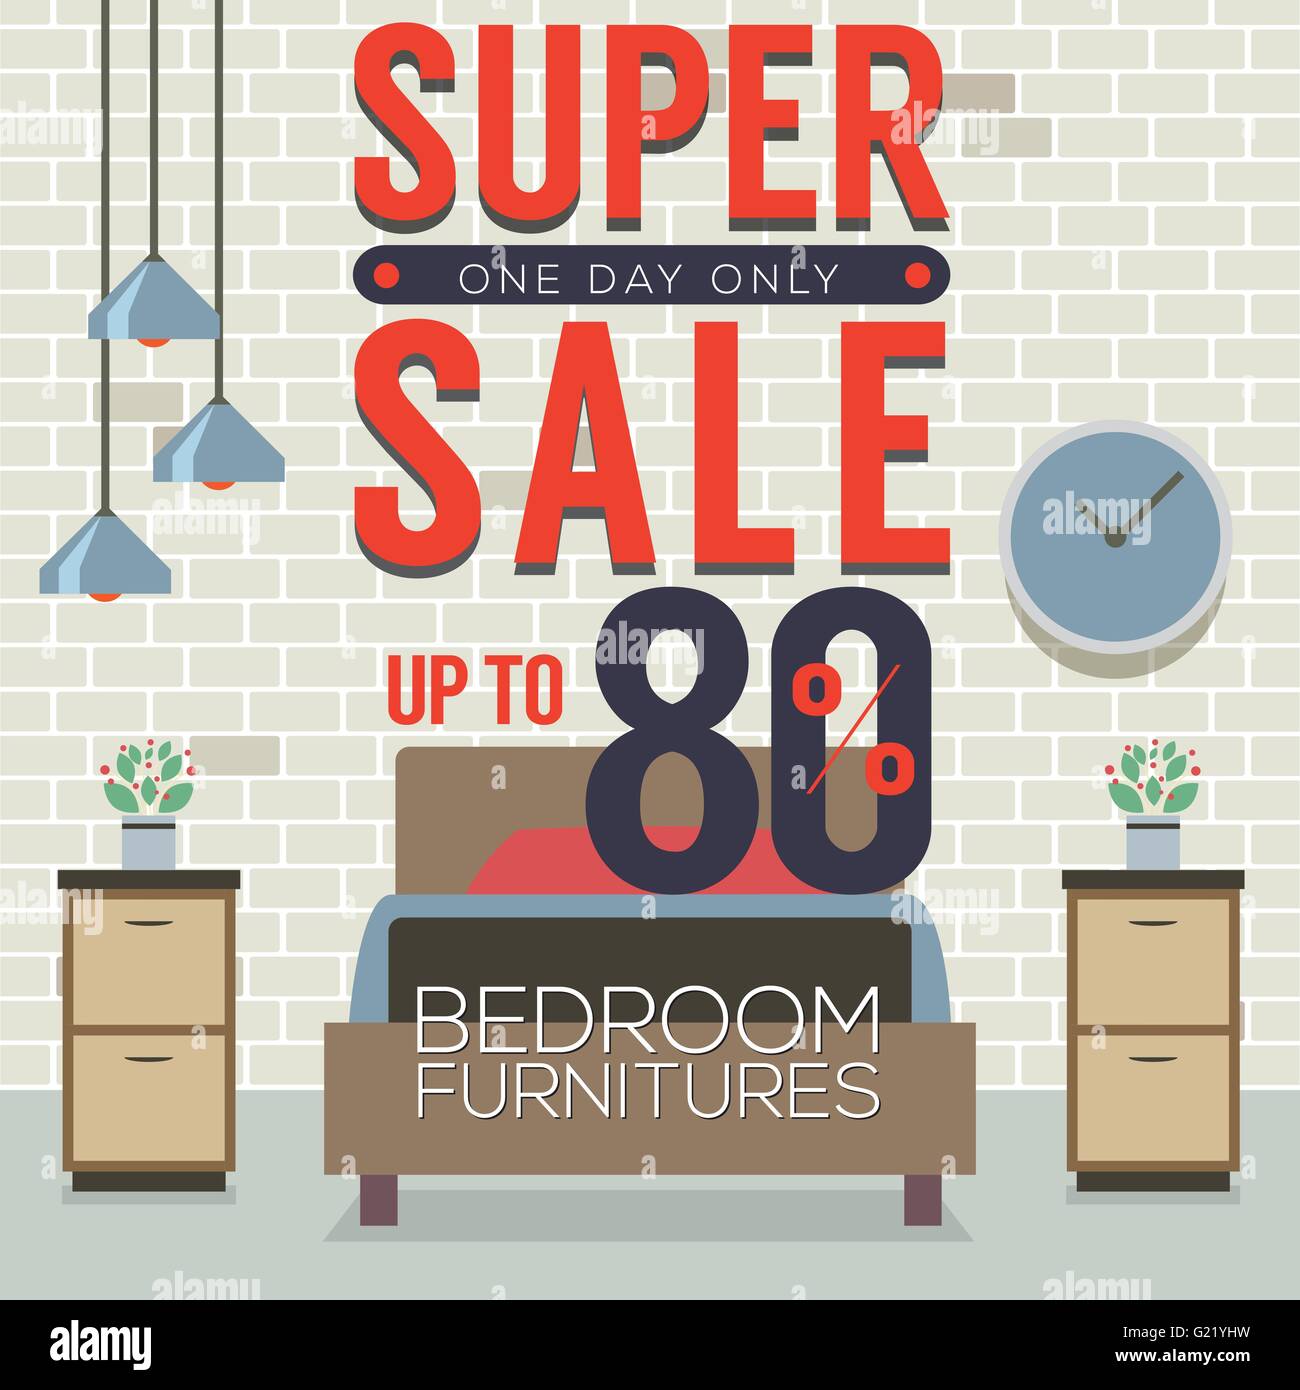 Furniture Super Sale Up to 80 Percent Vector Illustration Stock Vector